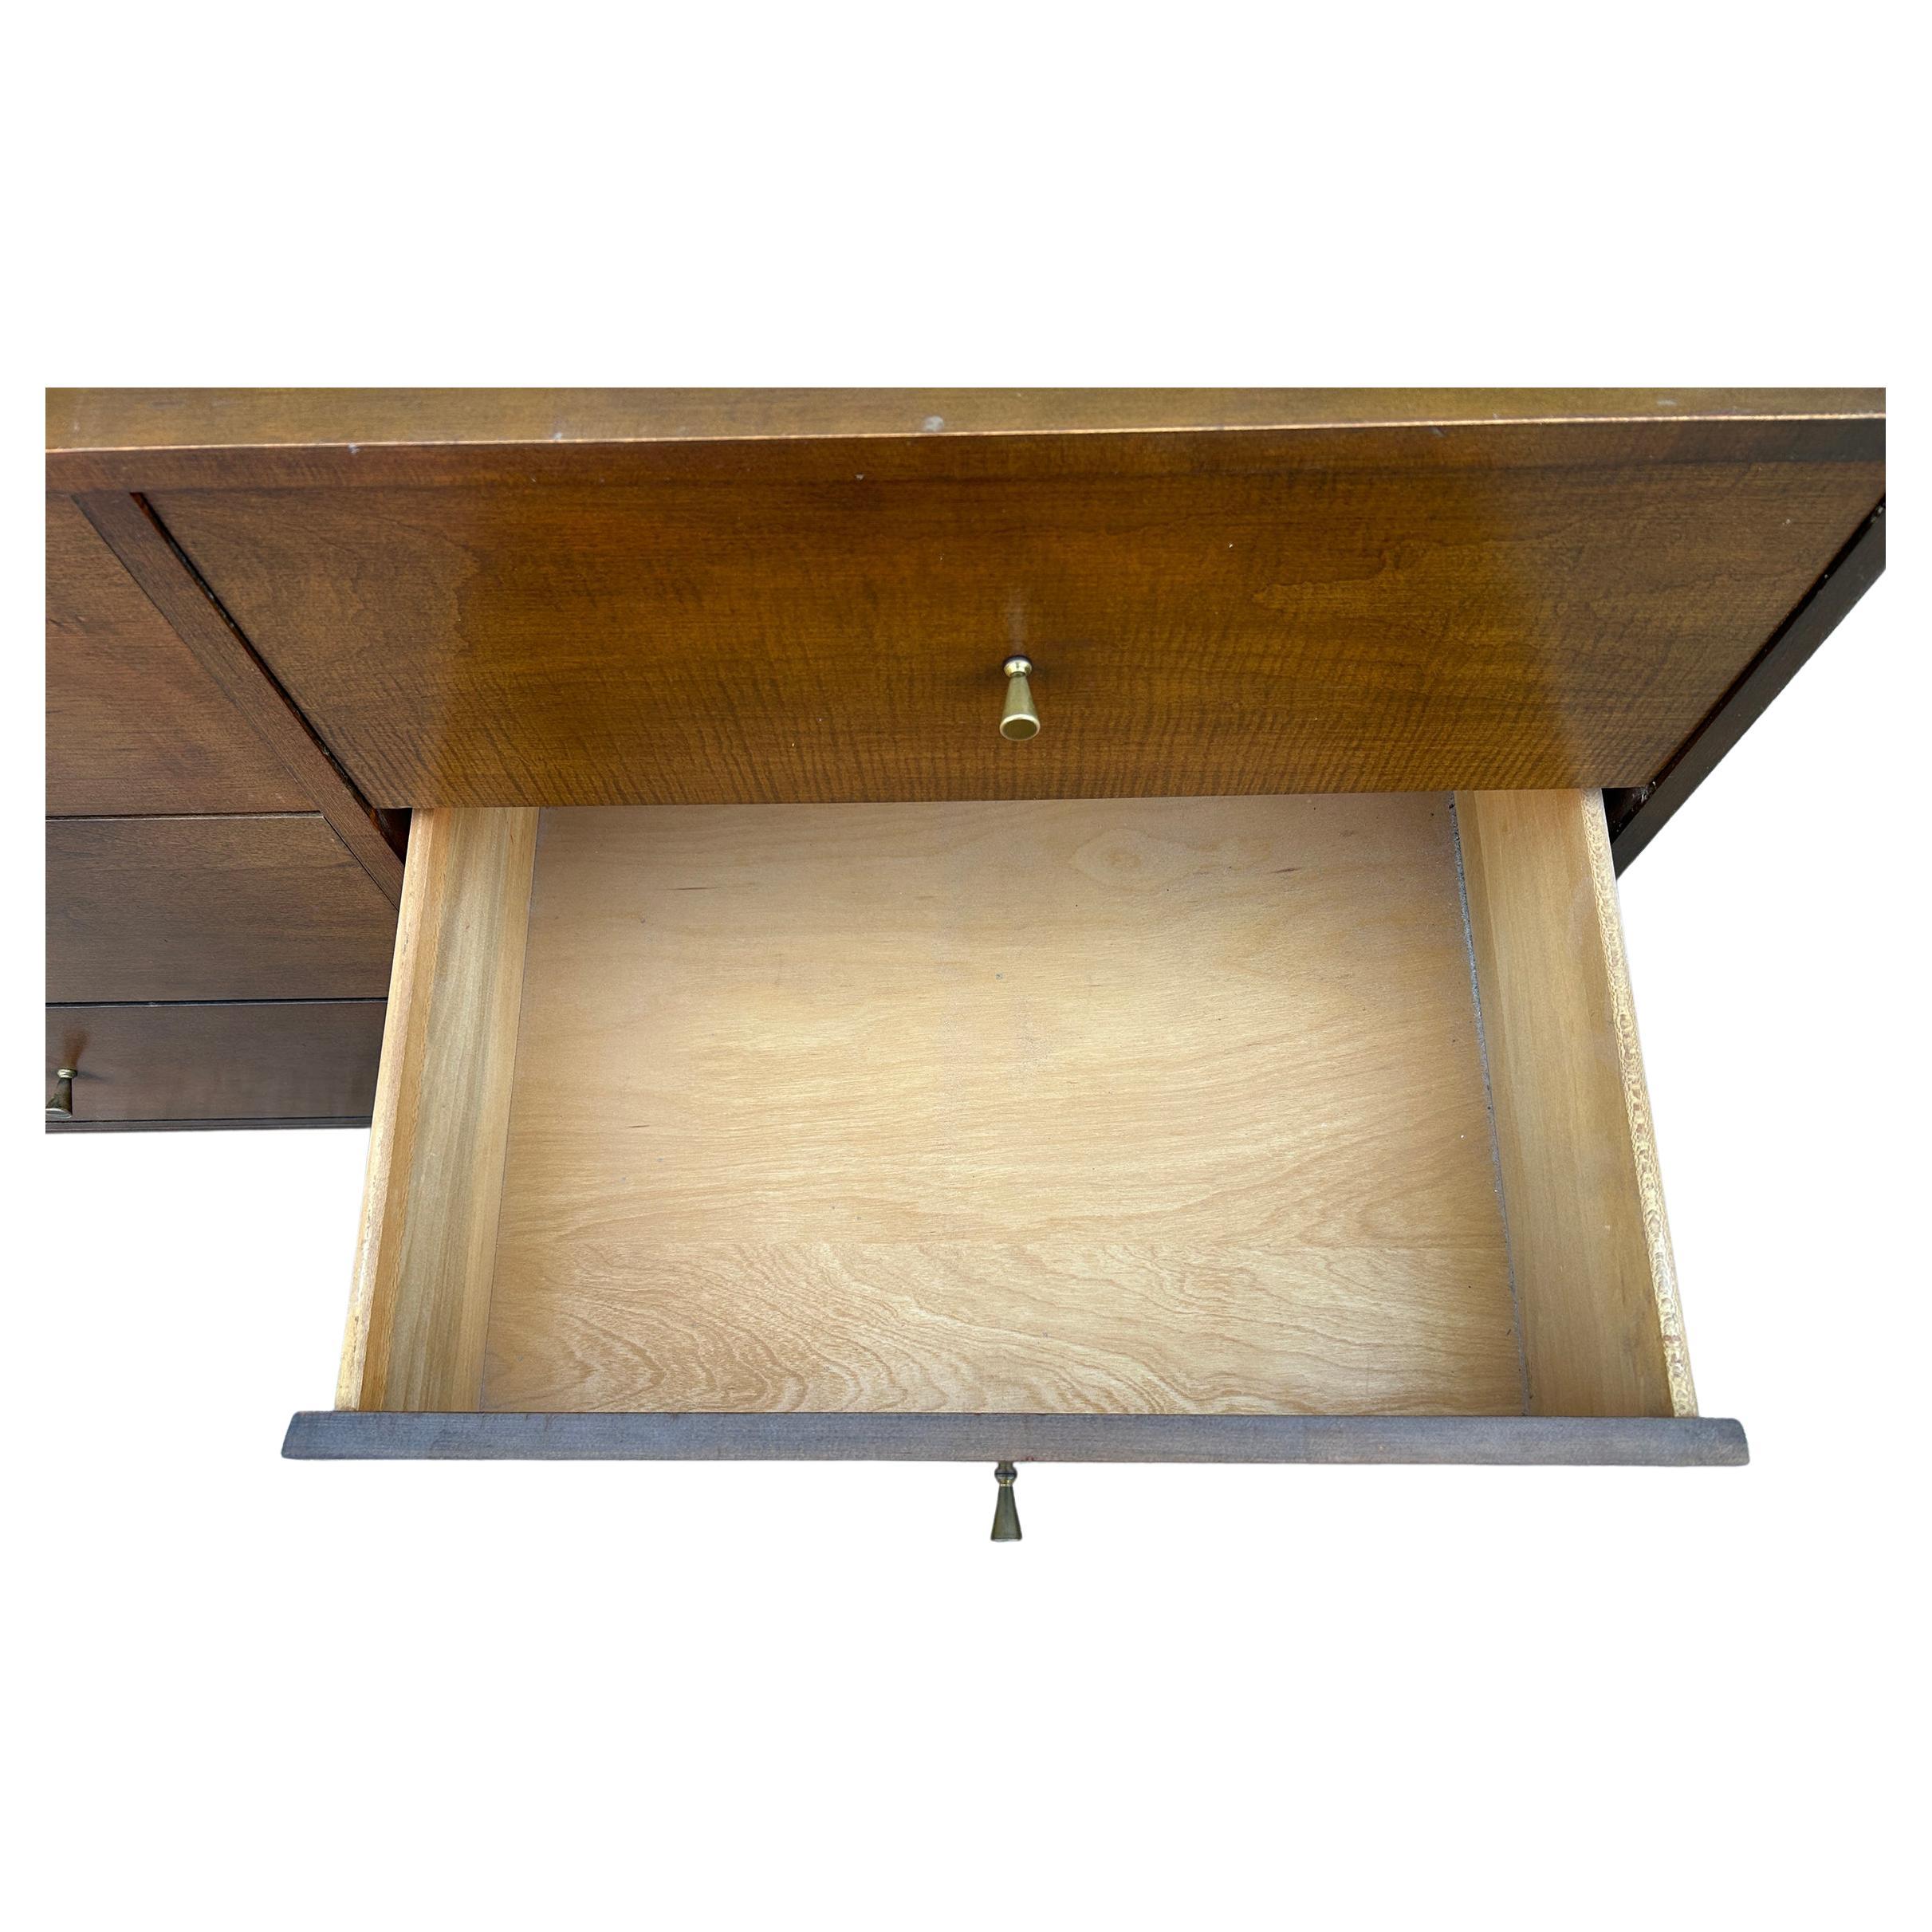 20th Century Midcentury Paul McCobb 6 Drawer Dresser Credenza #1509 Walnut finish Brass pulls